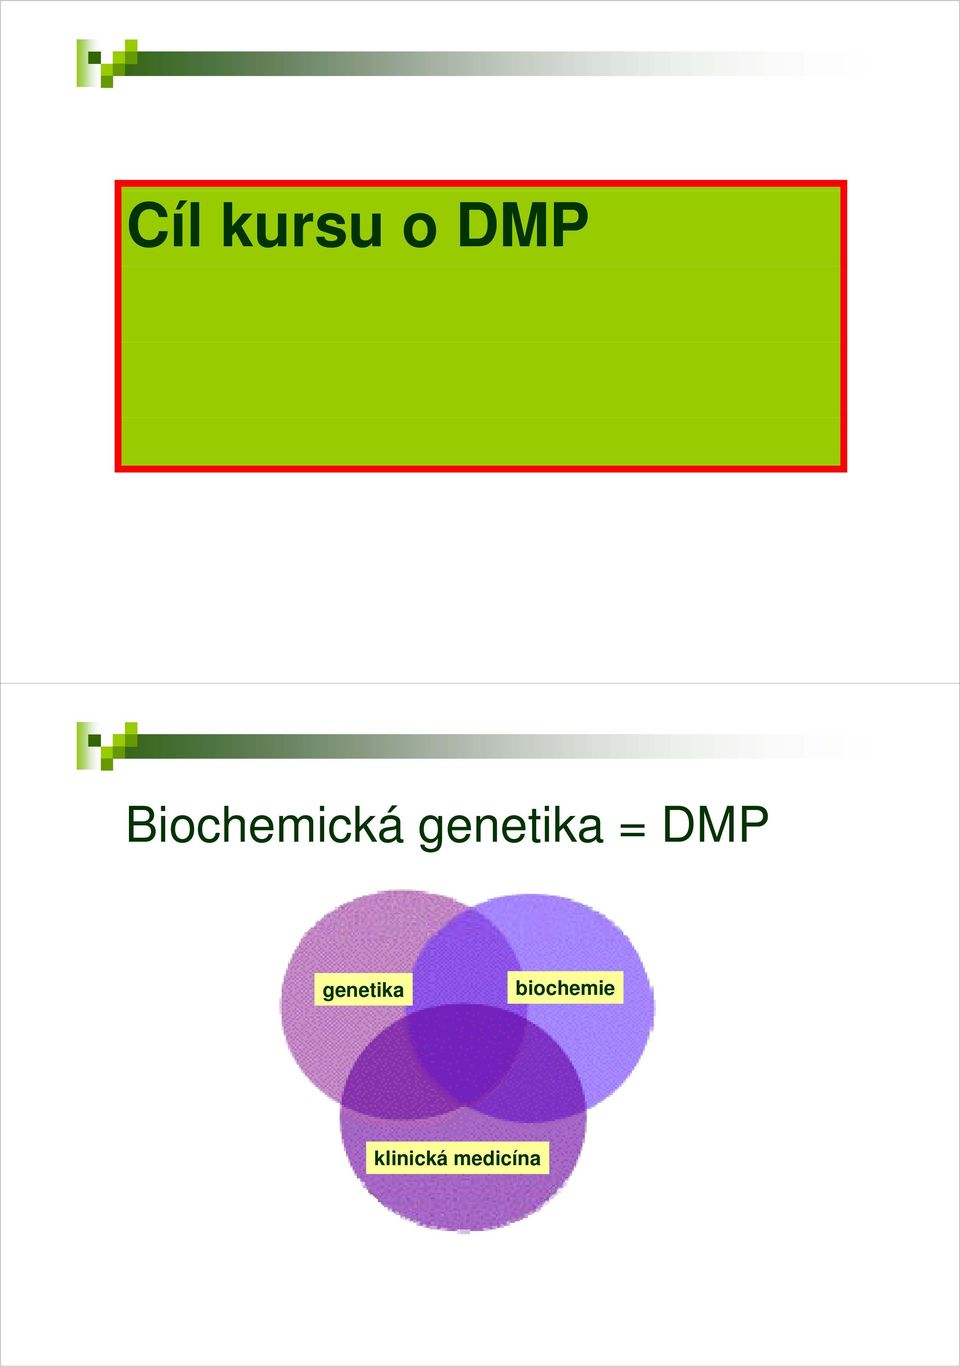 genetika = DMP